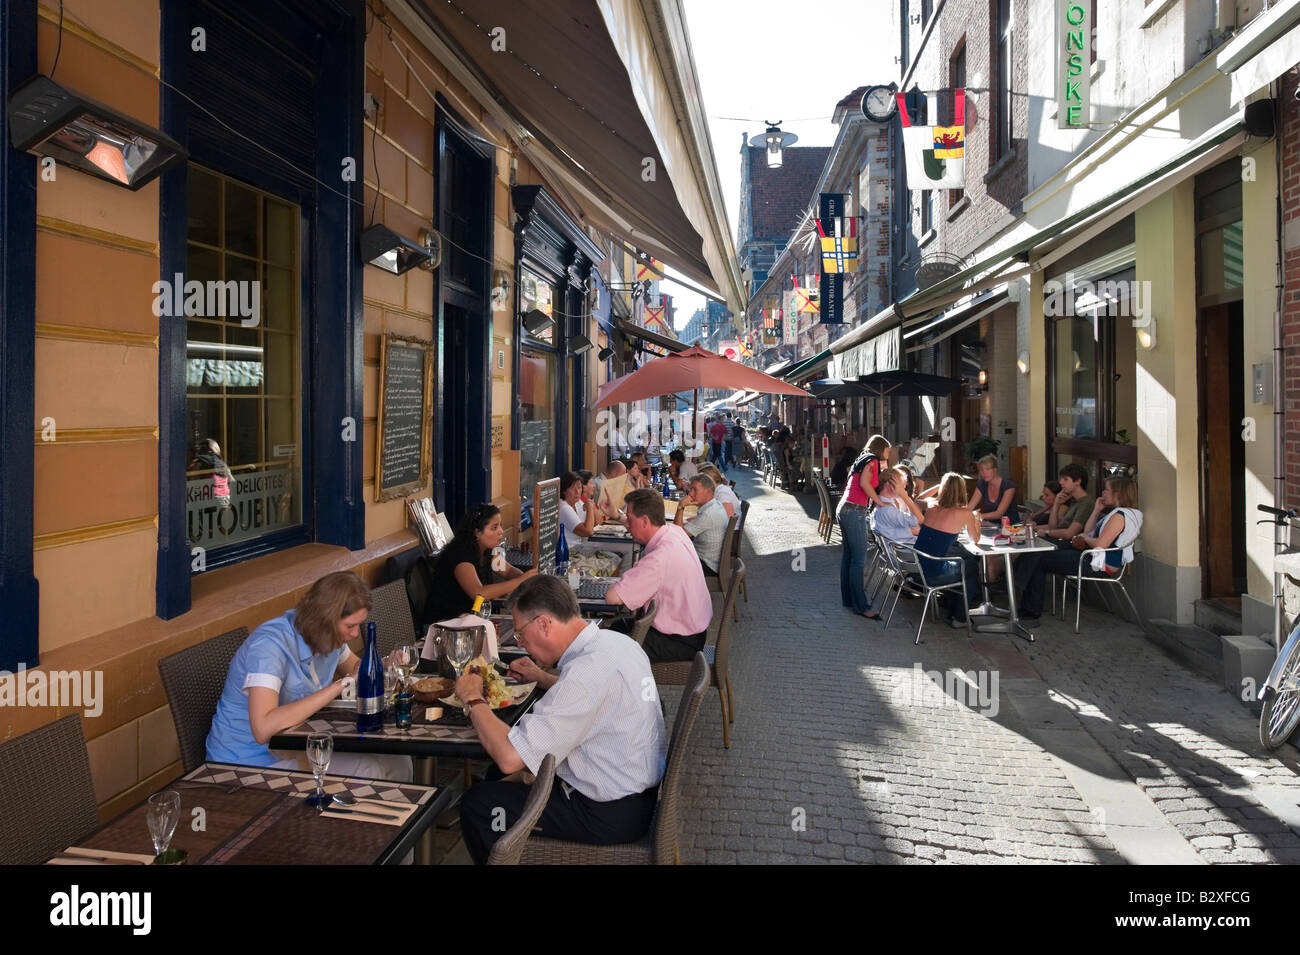 Dinner at sidewalk restaurants in the narrow pedestrianised street of Muntstraat, Leuven, Belgium Stock Photo